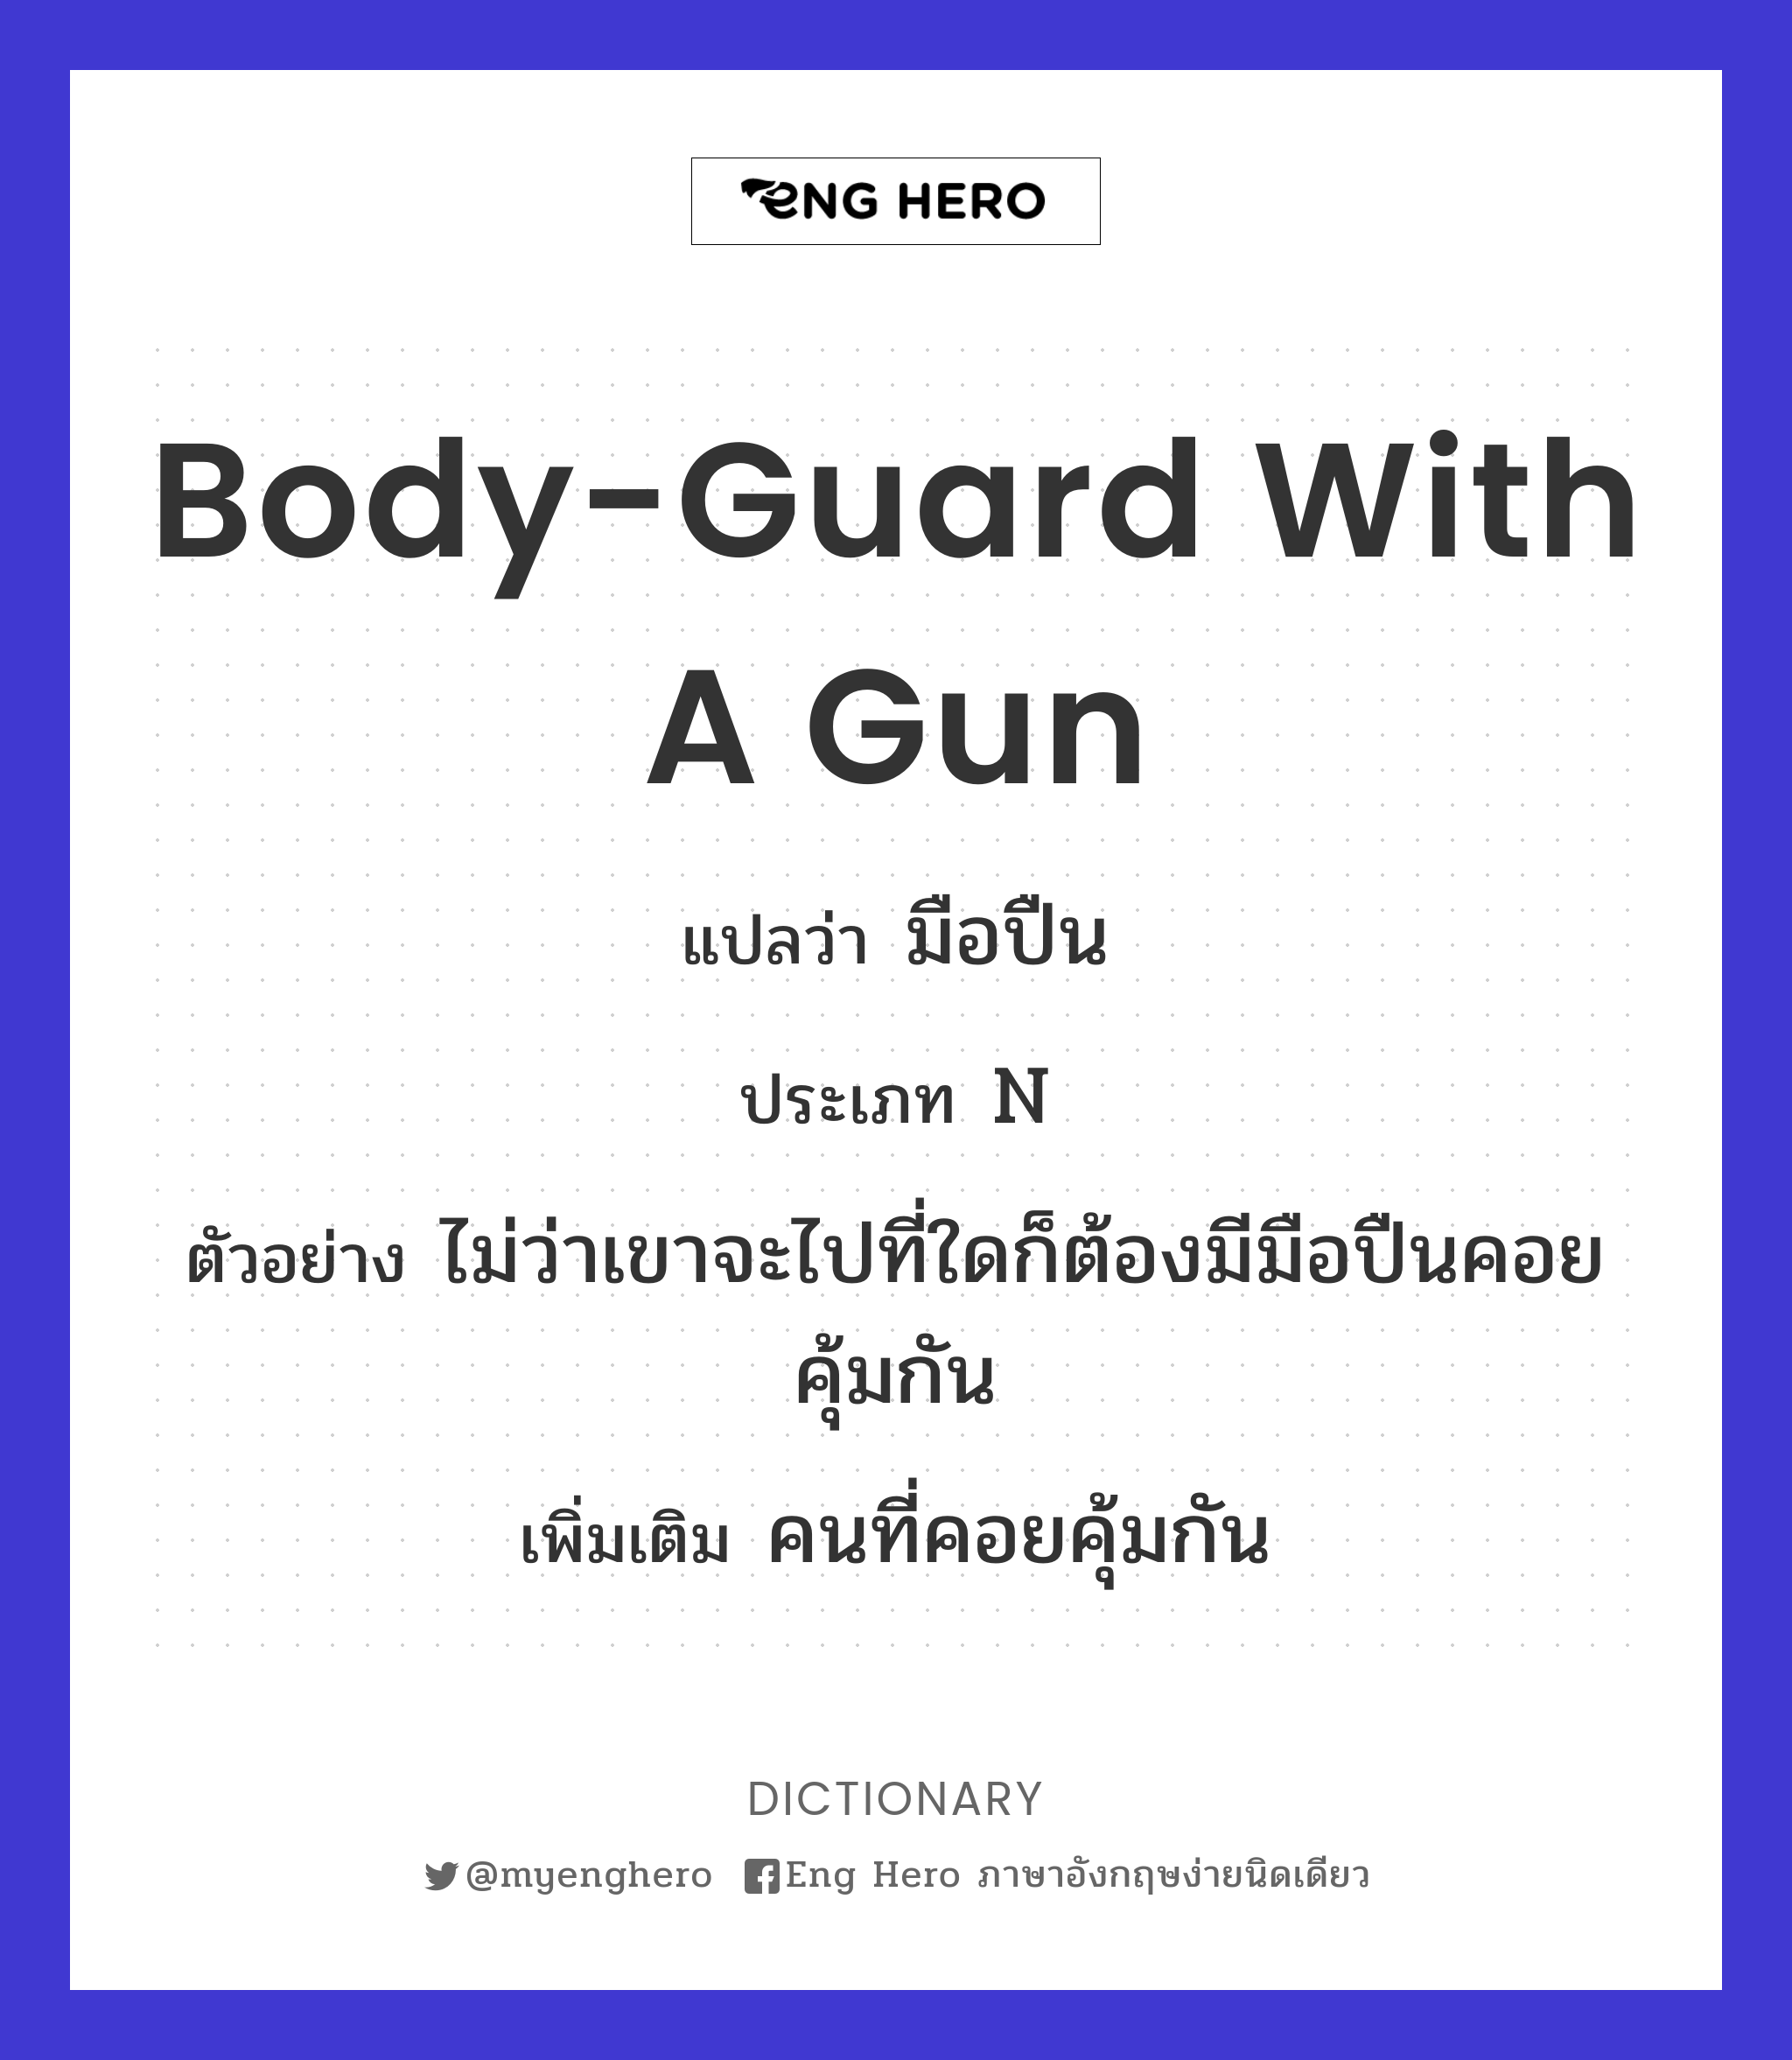 body-guard with a gun